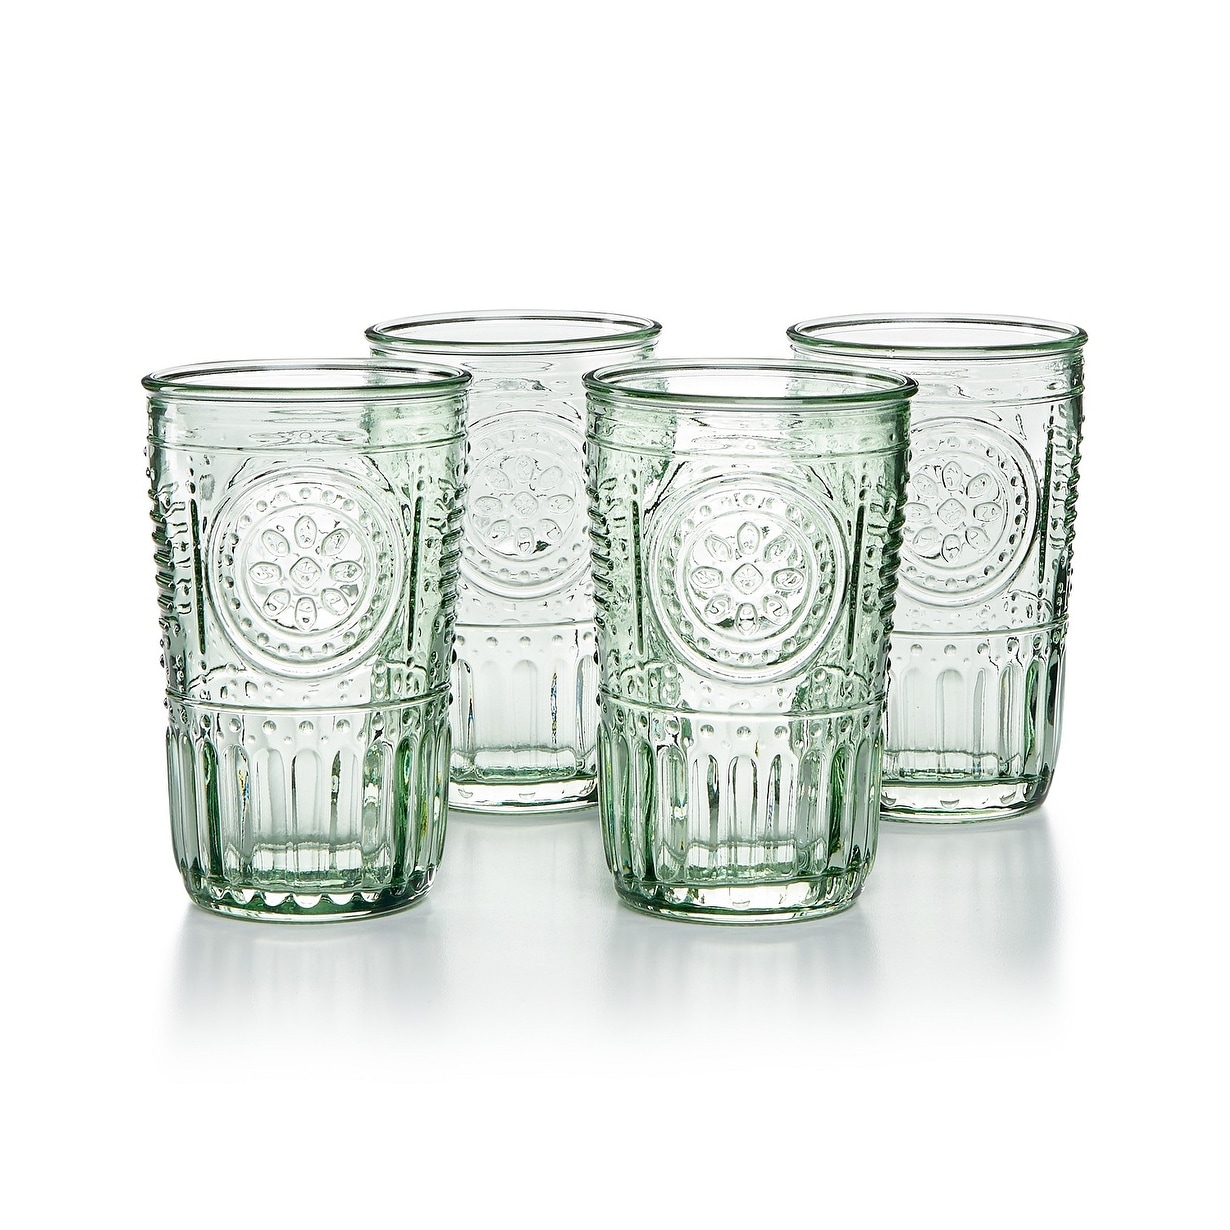 https://ak1.ostkcdn.com/images/products/is/images/direct/9bef04c8f90c84f2c6bafeff8fc3d9126fcb8343/Bormioli-Rocco-Romantic-Glass-Drinking-Tumbler-Victorian-Inspired-Set-Of-4.jpg